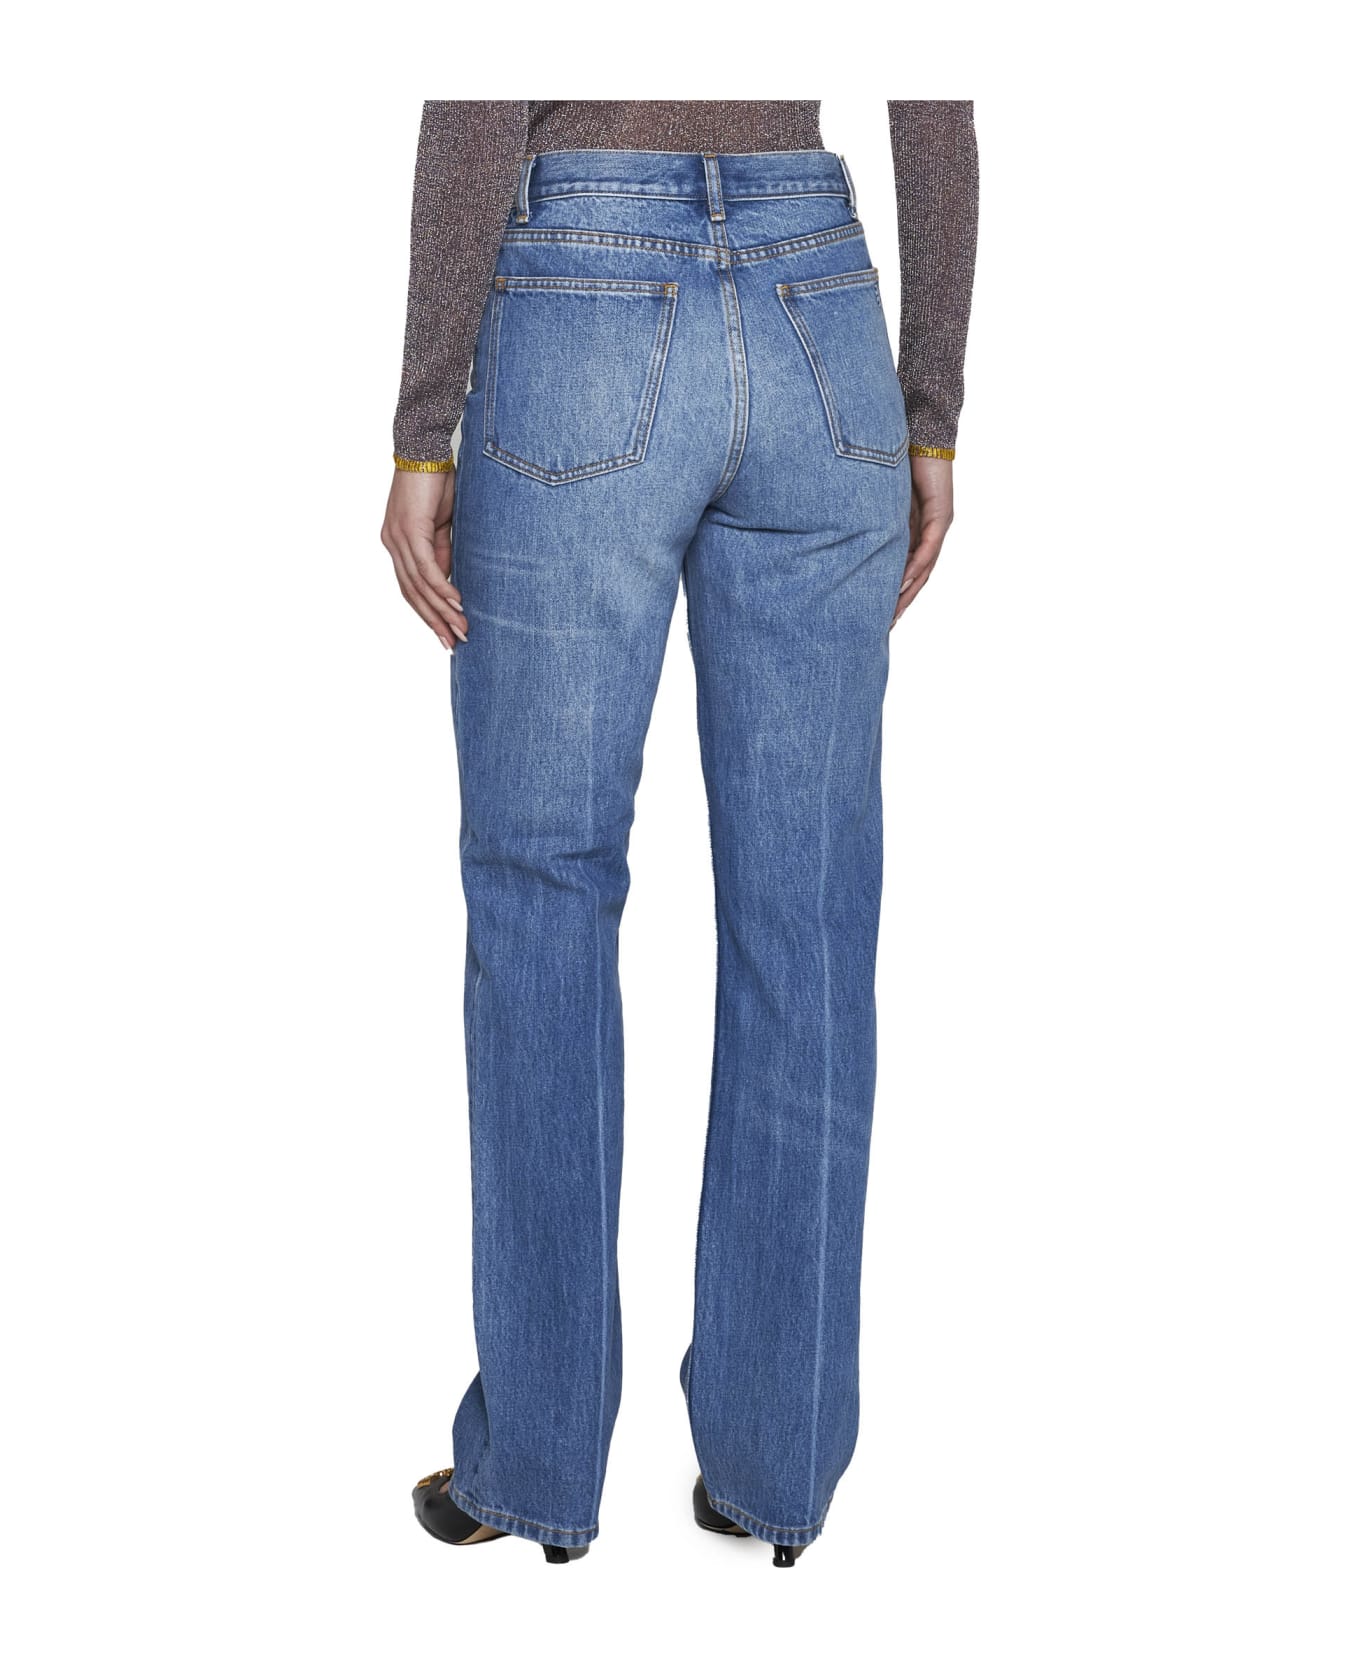 Tory Burch 5-pocket Straight-leg Jeans - Blue デニム